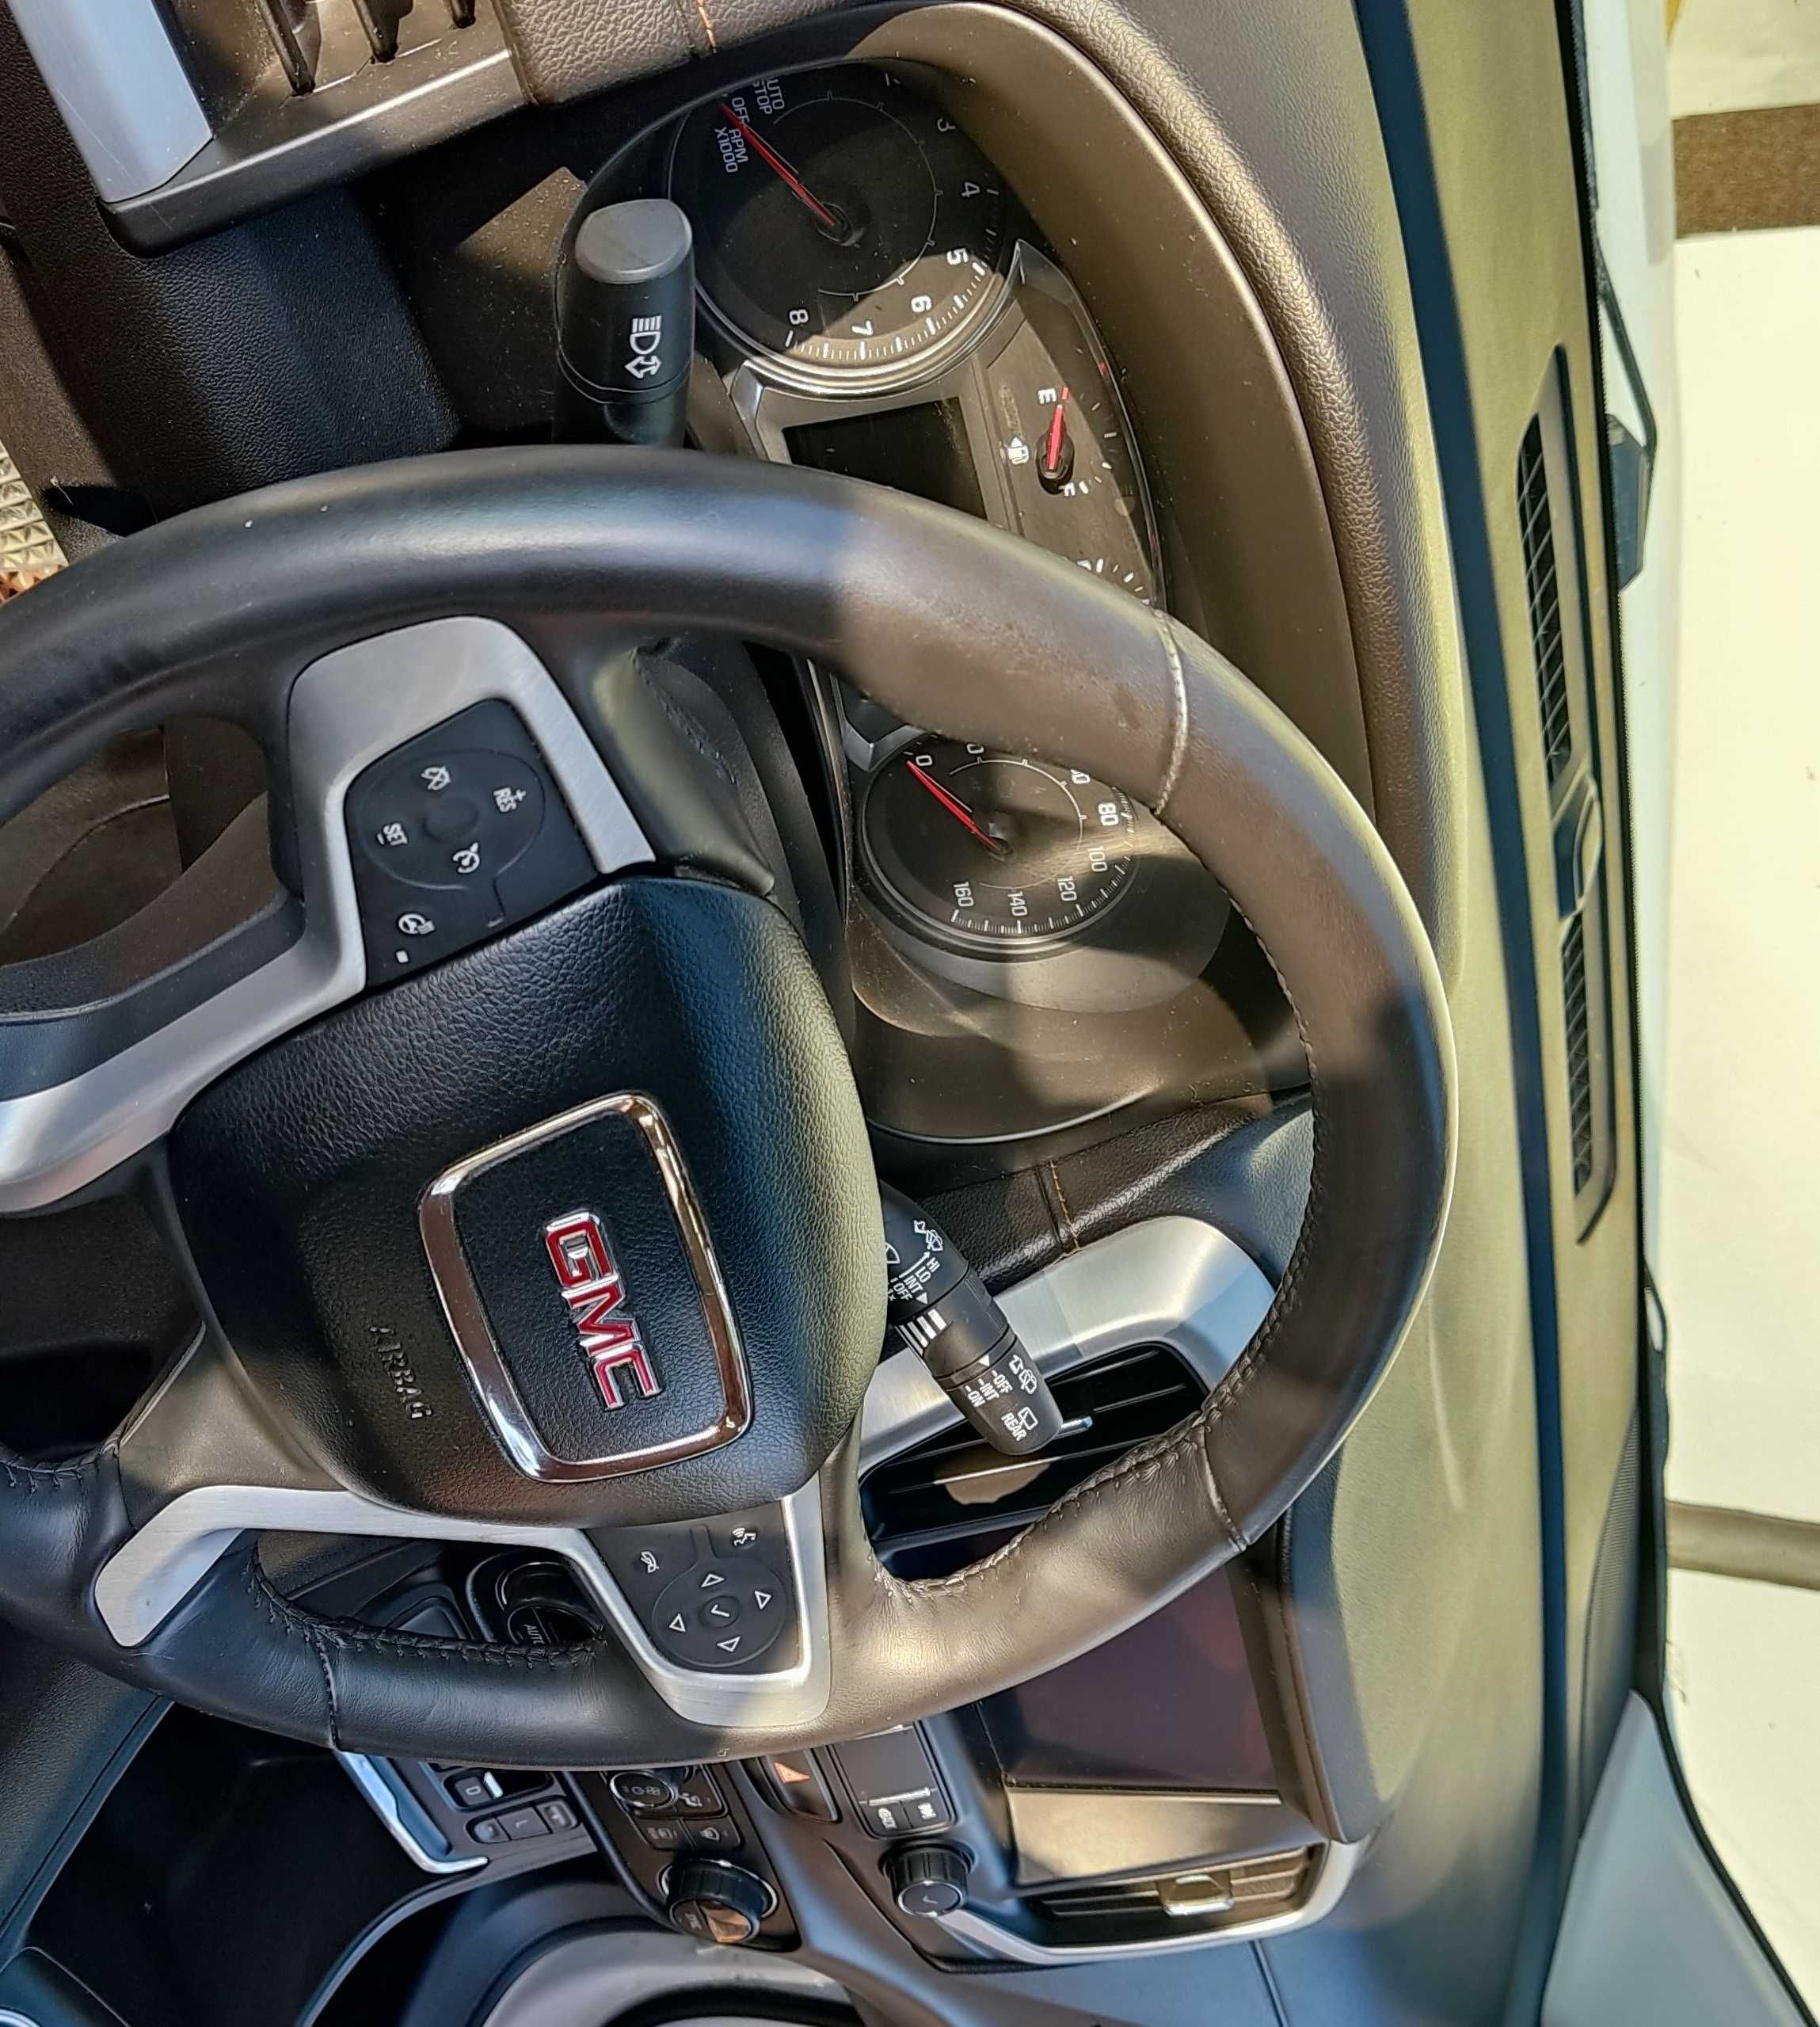 Авто БОМБА !!! GMC TERRAIN SLT 2019 4x4 в коже.   Американский RAV4